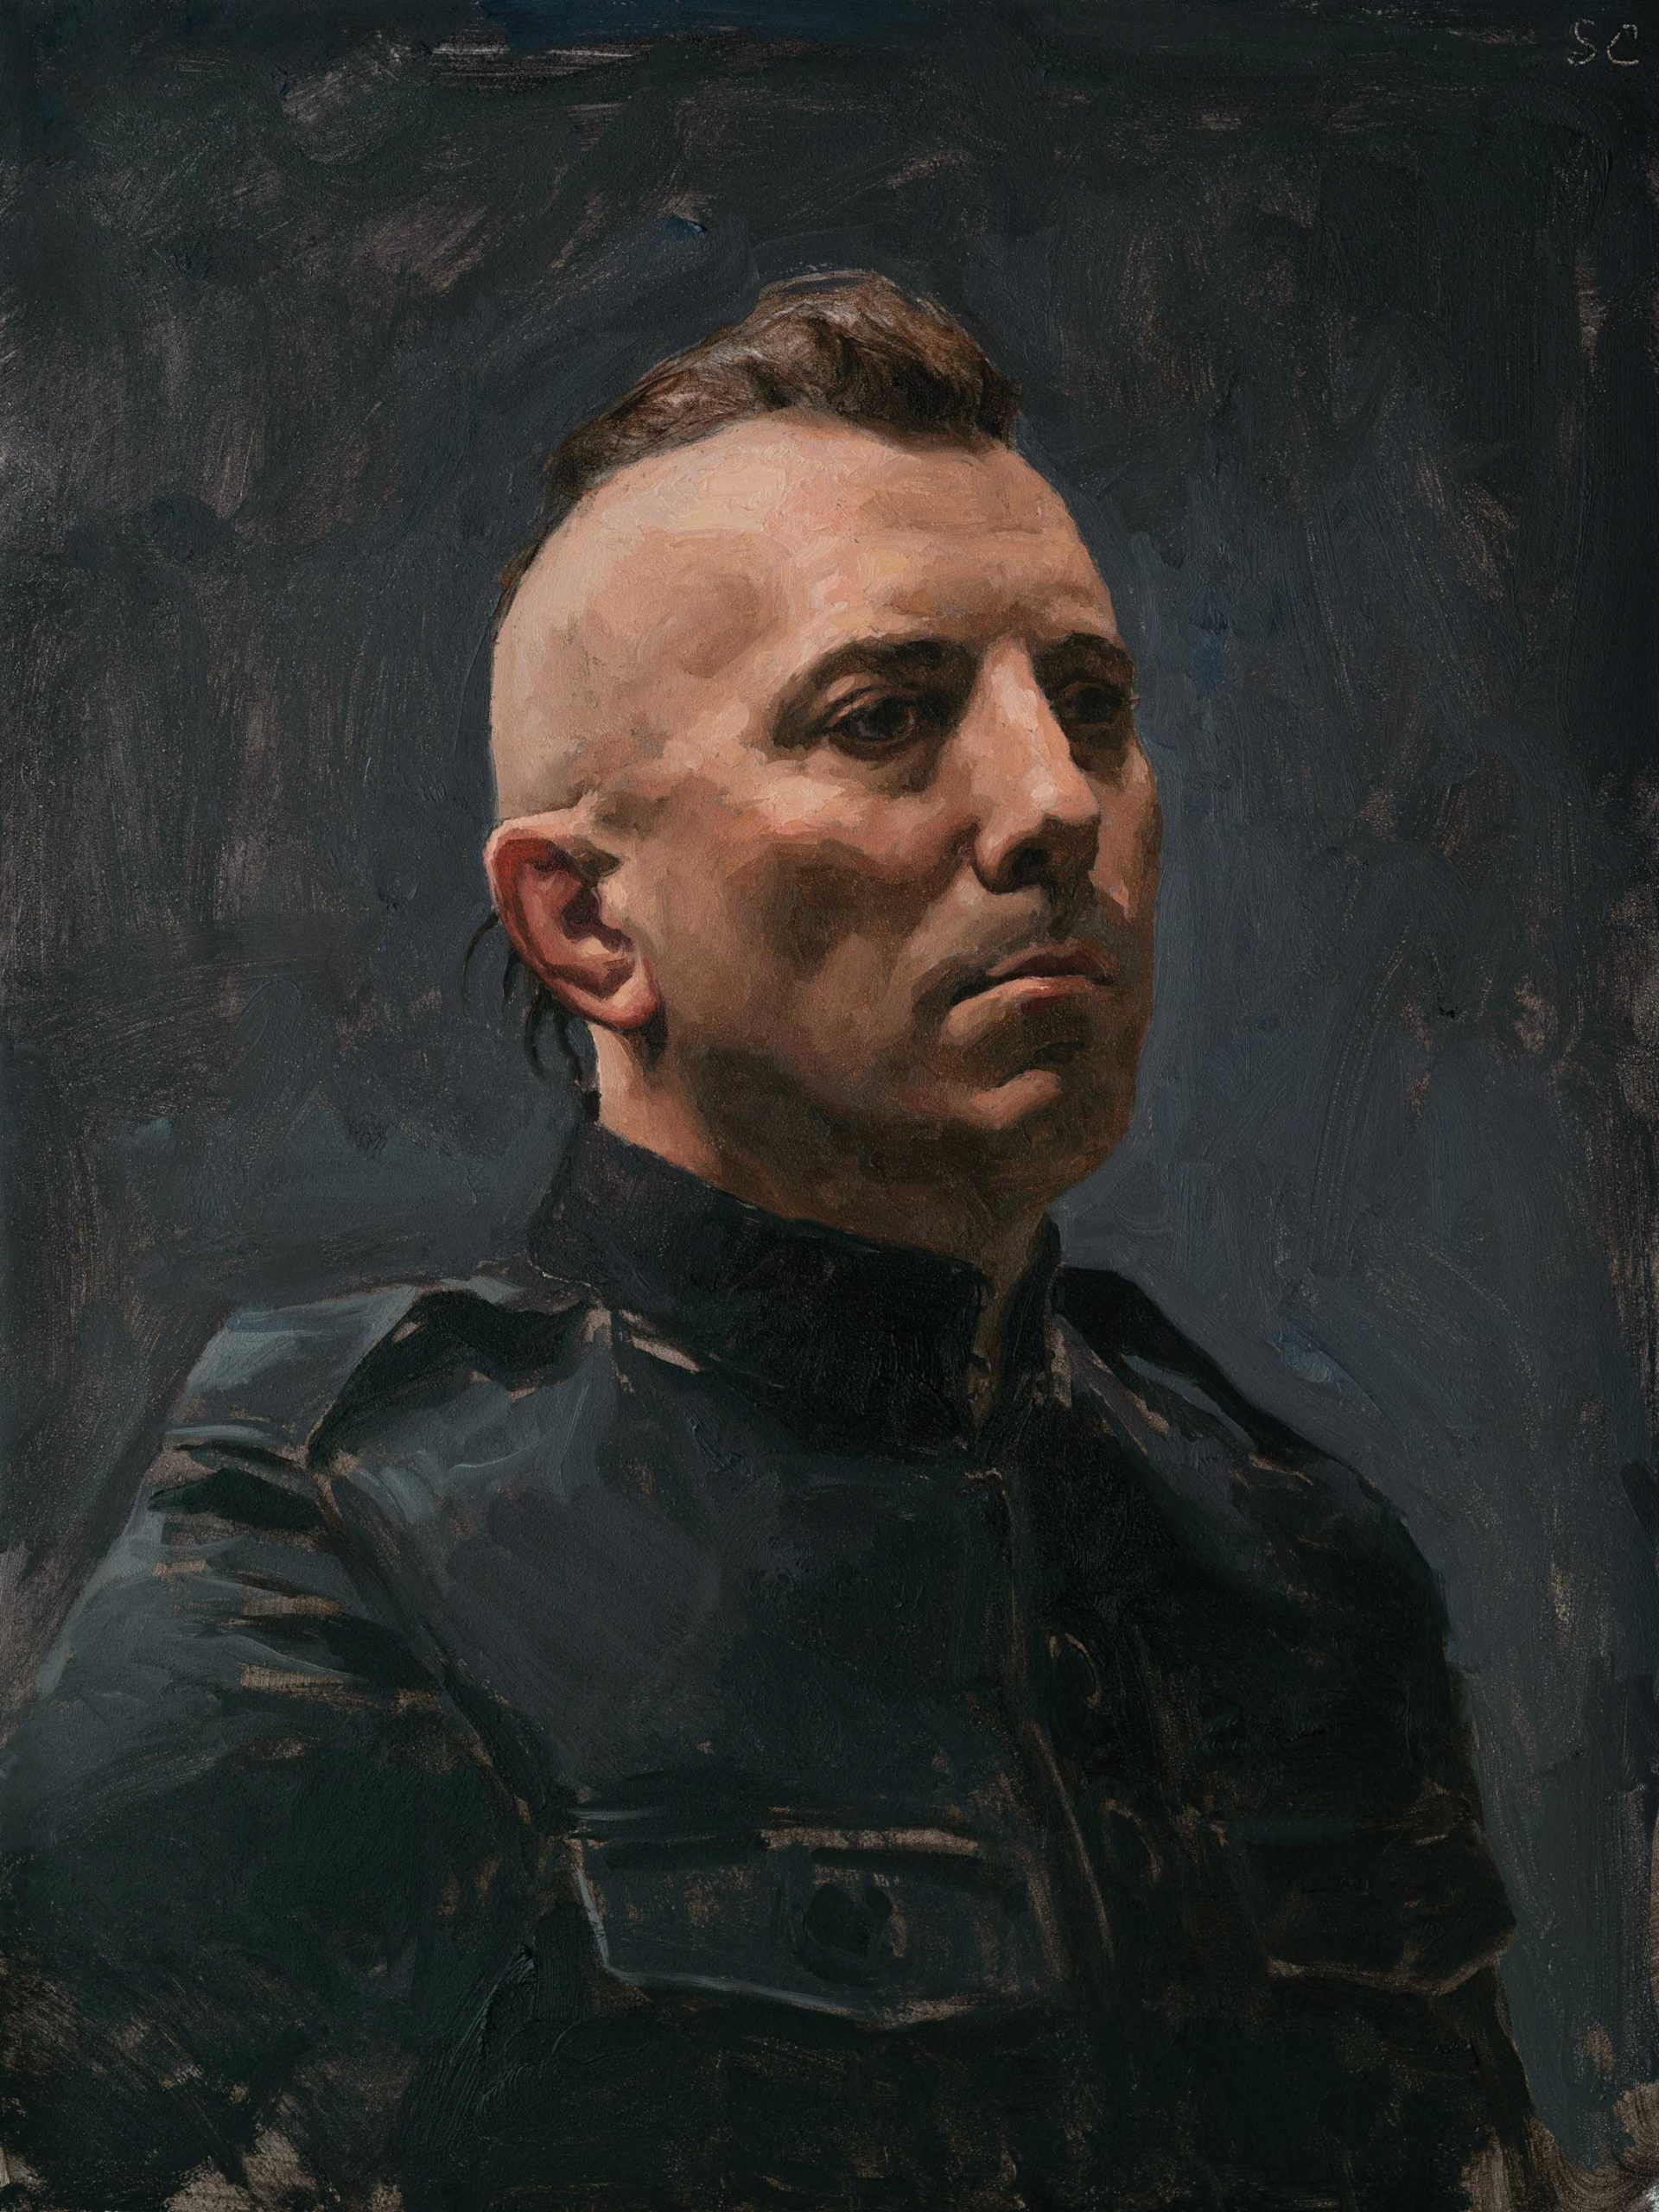 Portrait paintings of the band Tool - Maynard James Keenan